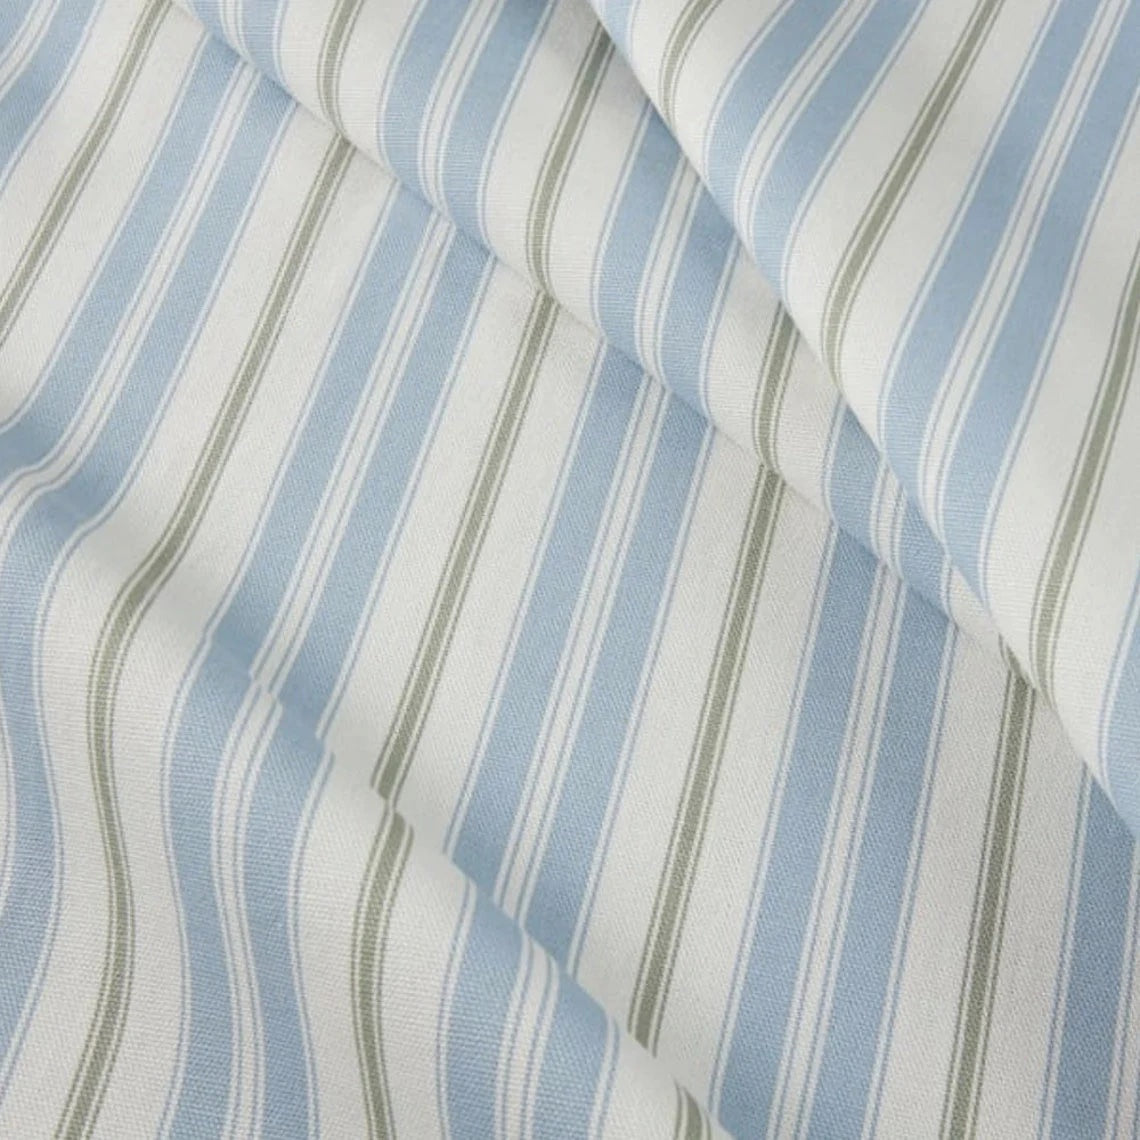 gathered crib skirt in newbury antique blue stripe- blue, green, white